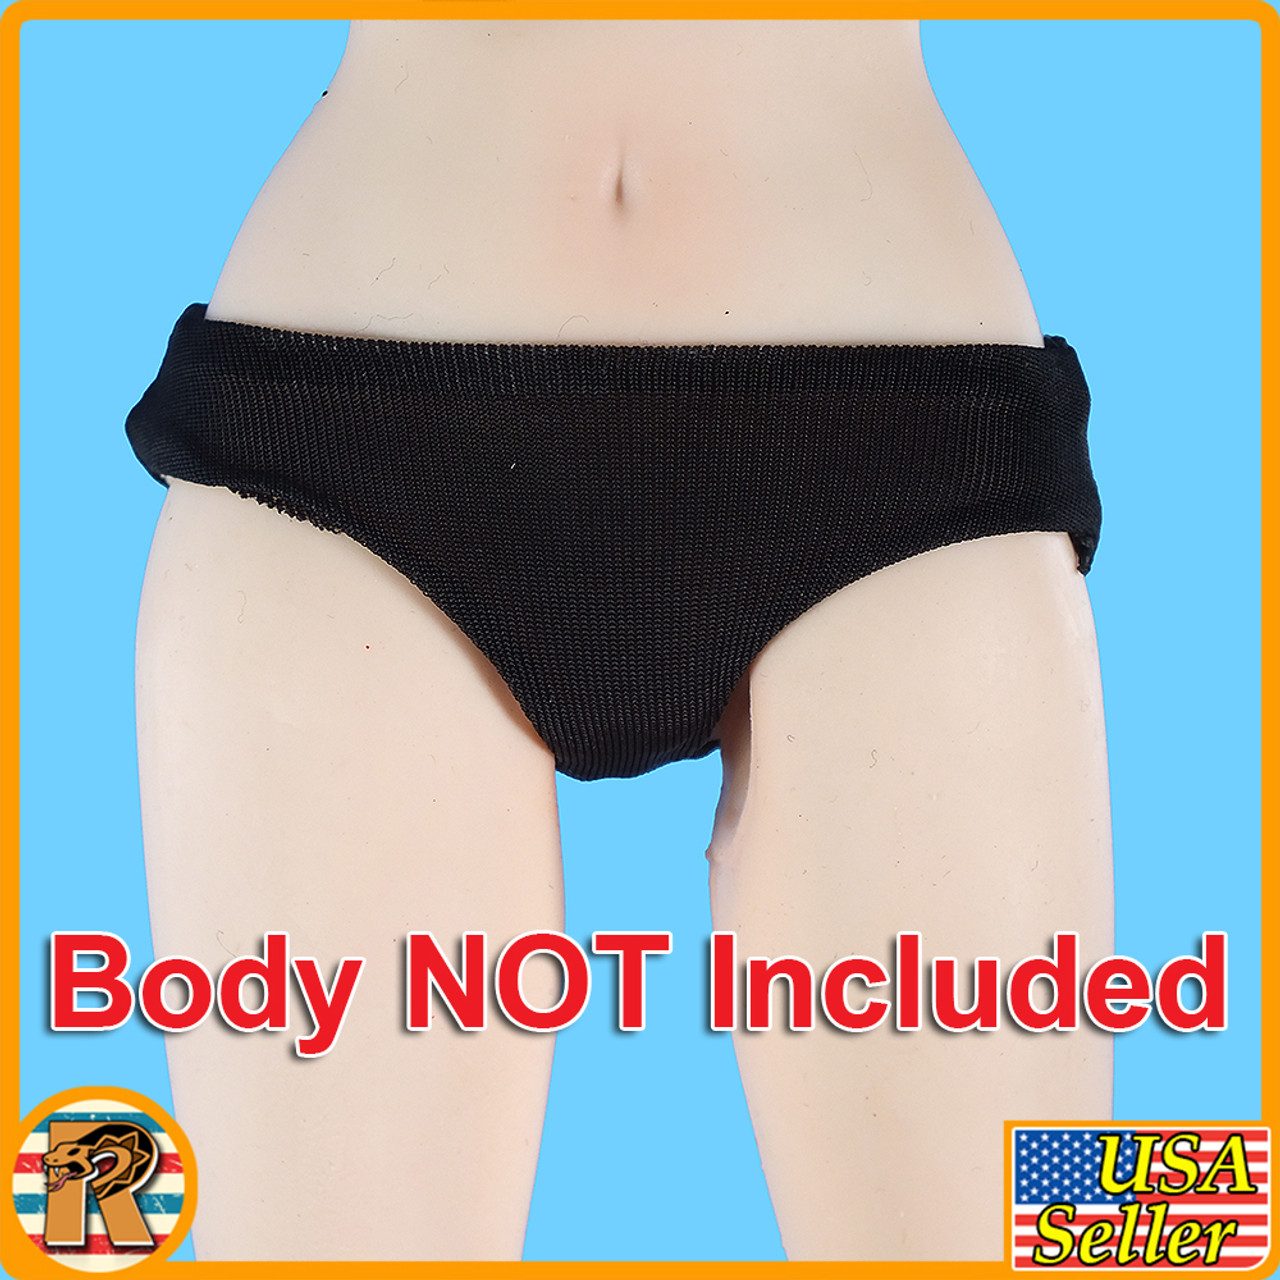 Eliza Frontline Maid - Underwear Panties - 1/6 Scale -